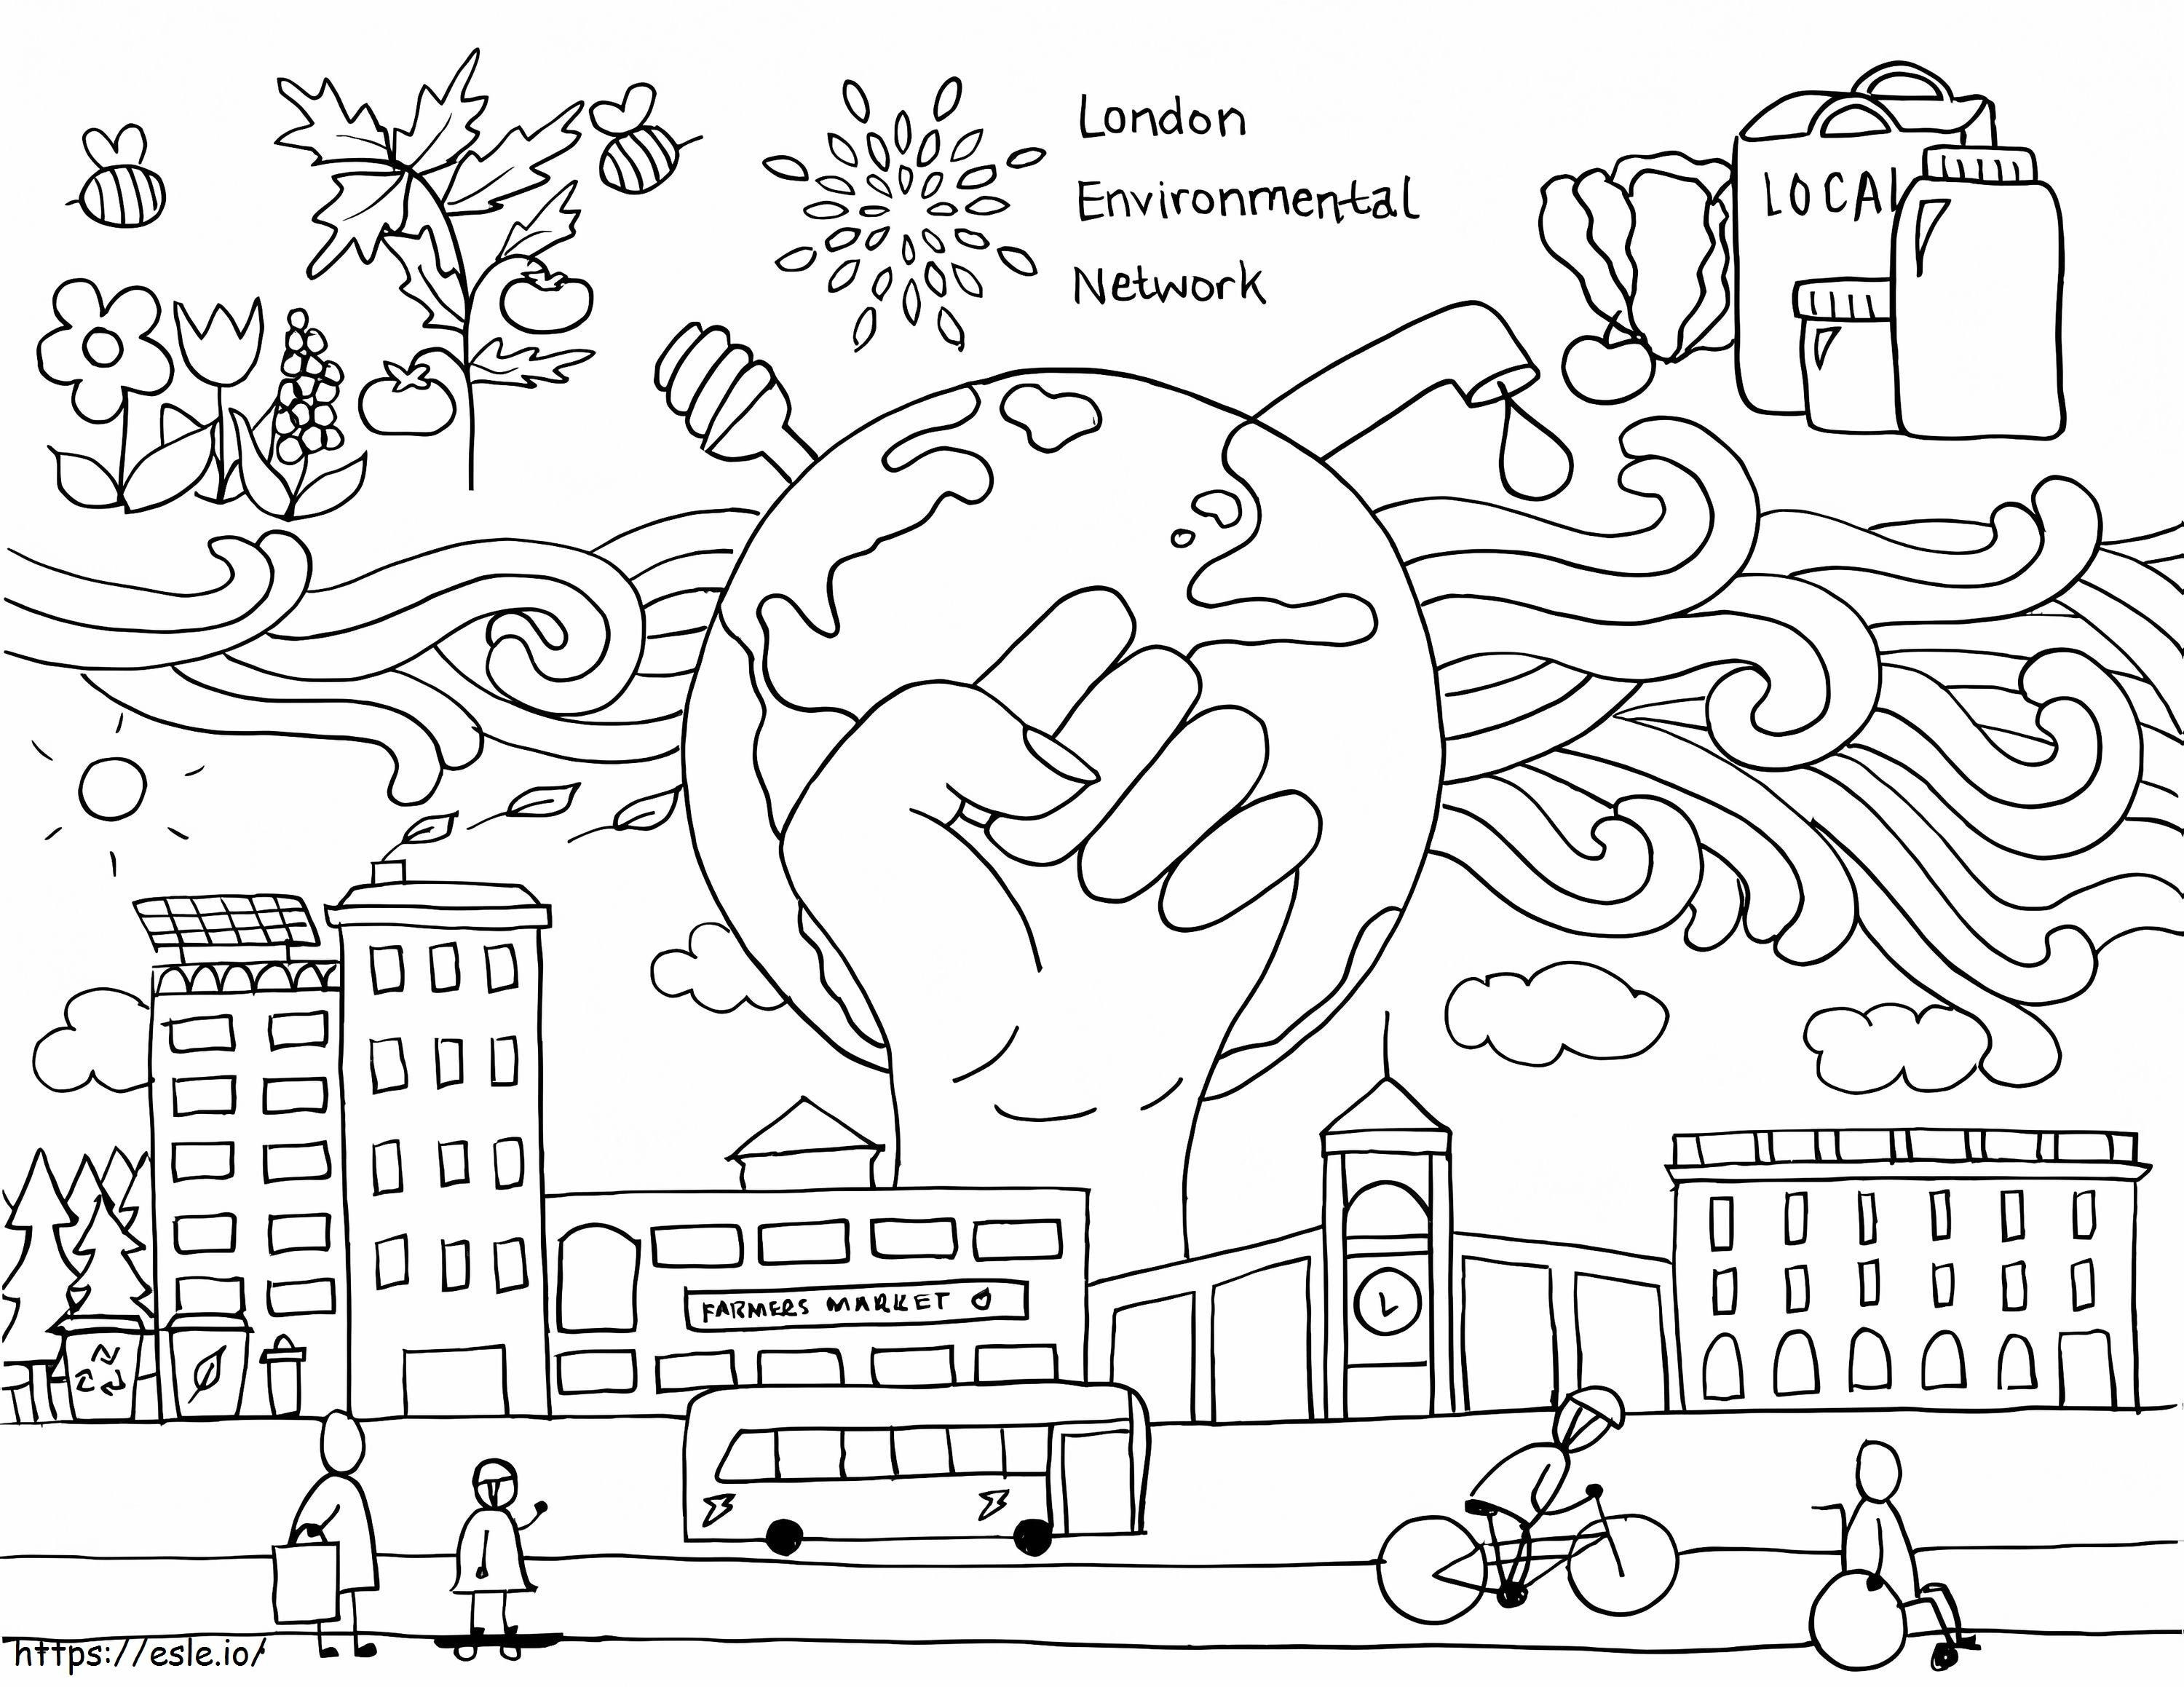 Jaringan Lingkungan London Gambar Mewarnai